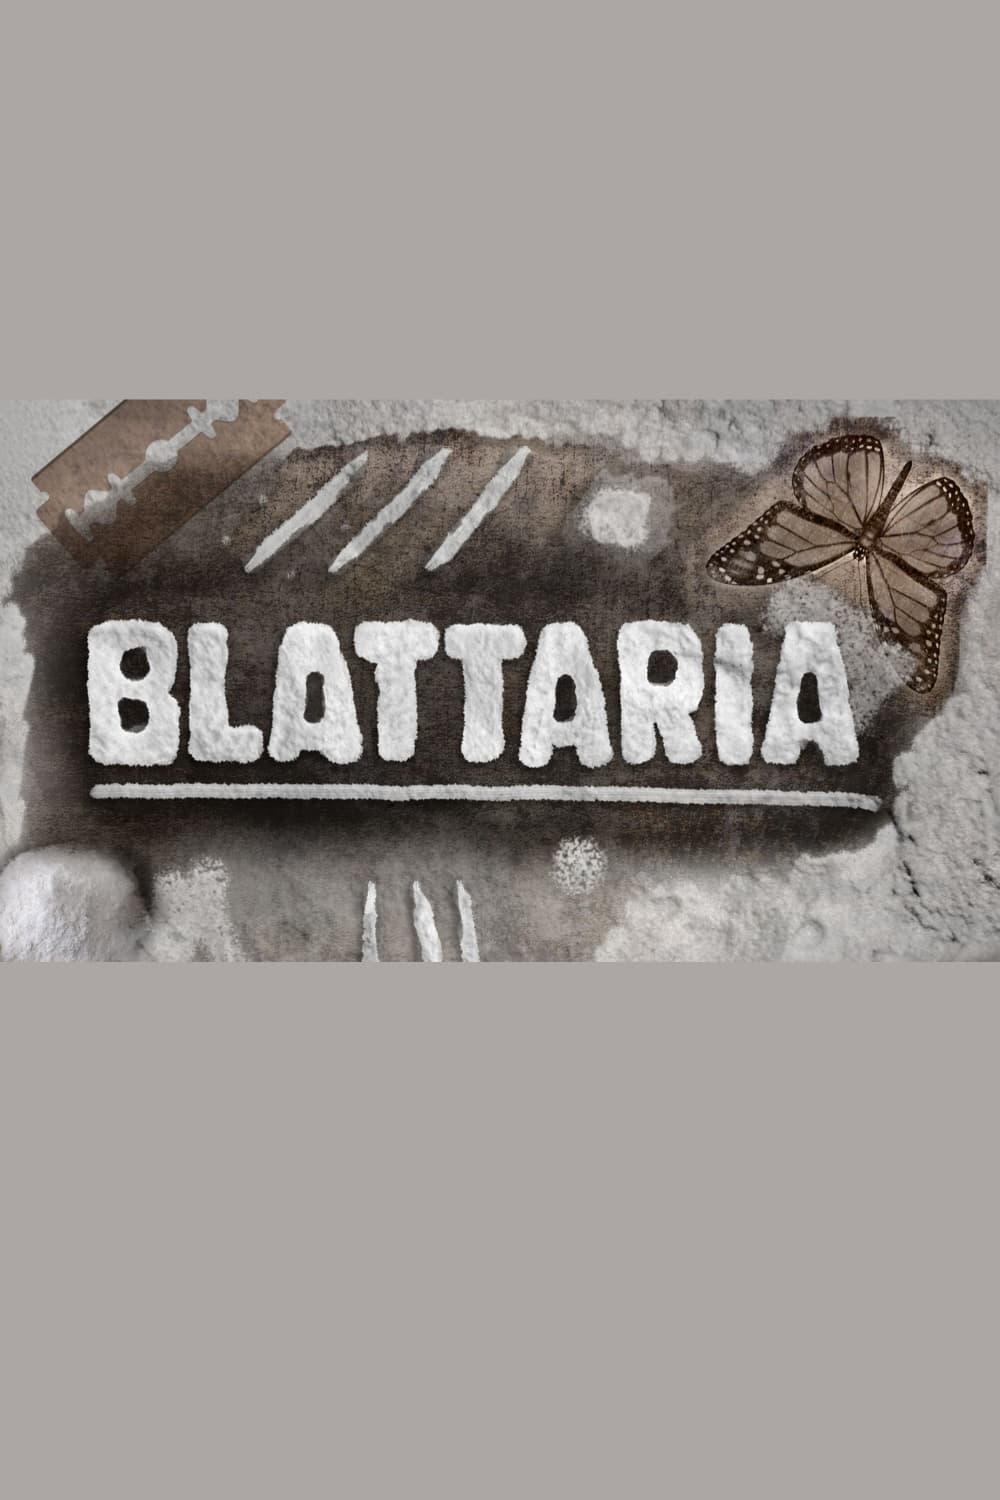 Blattaria